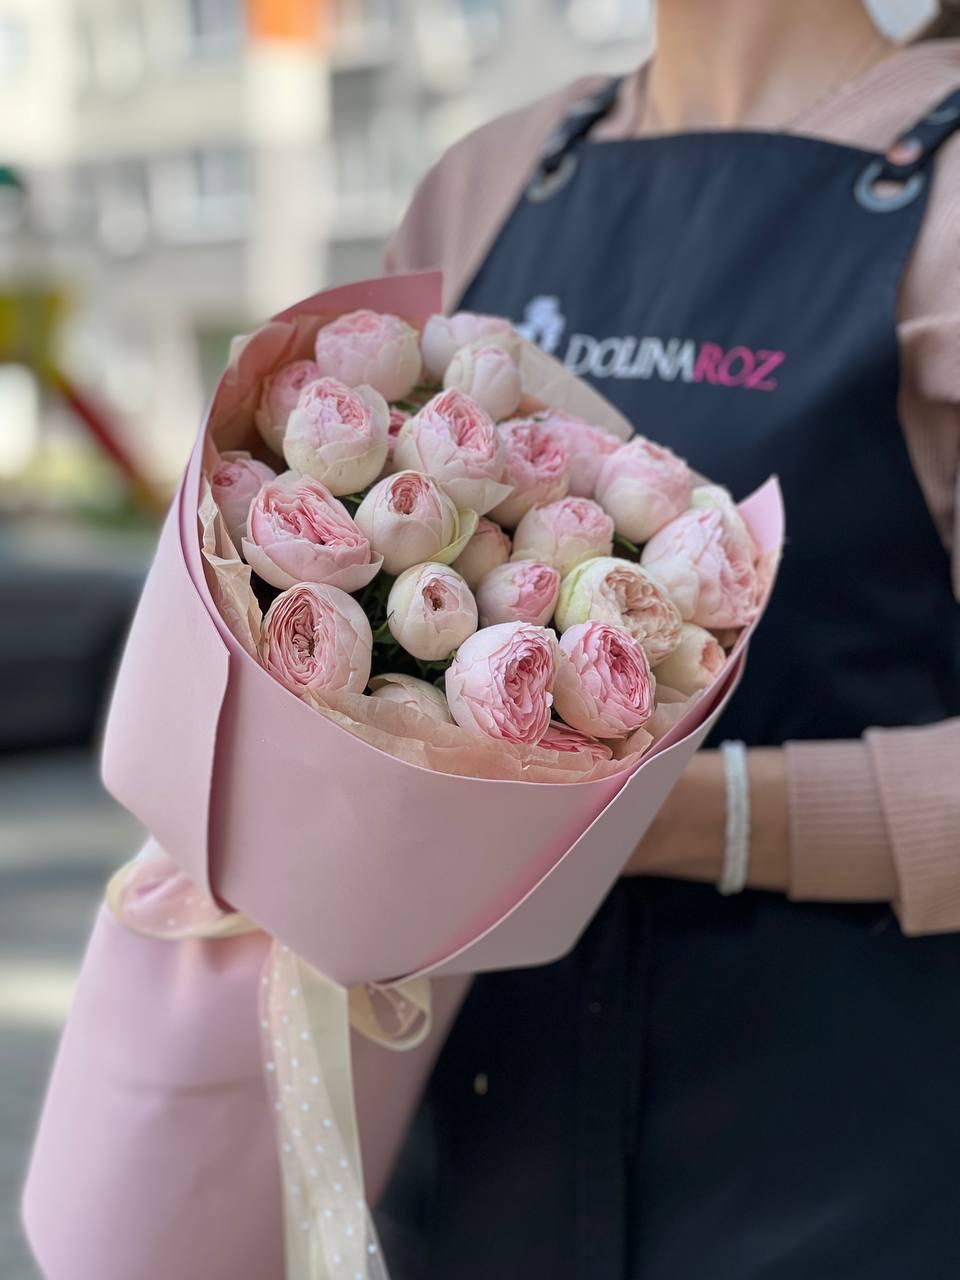 Bouquet of roses "Buzantia"